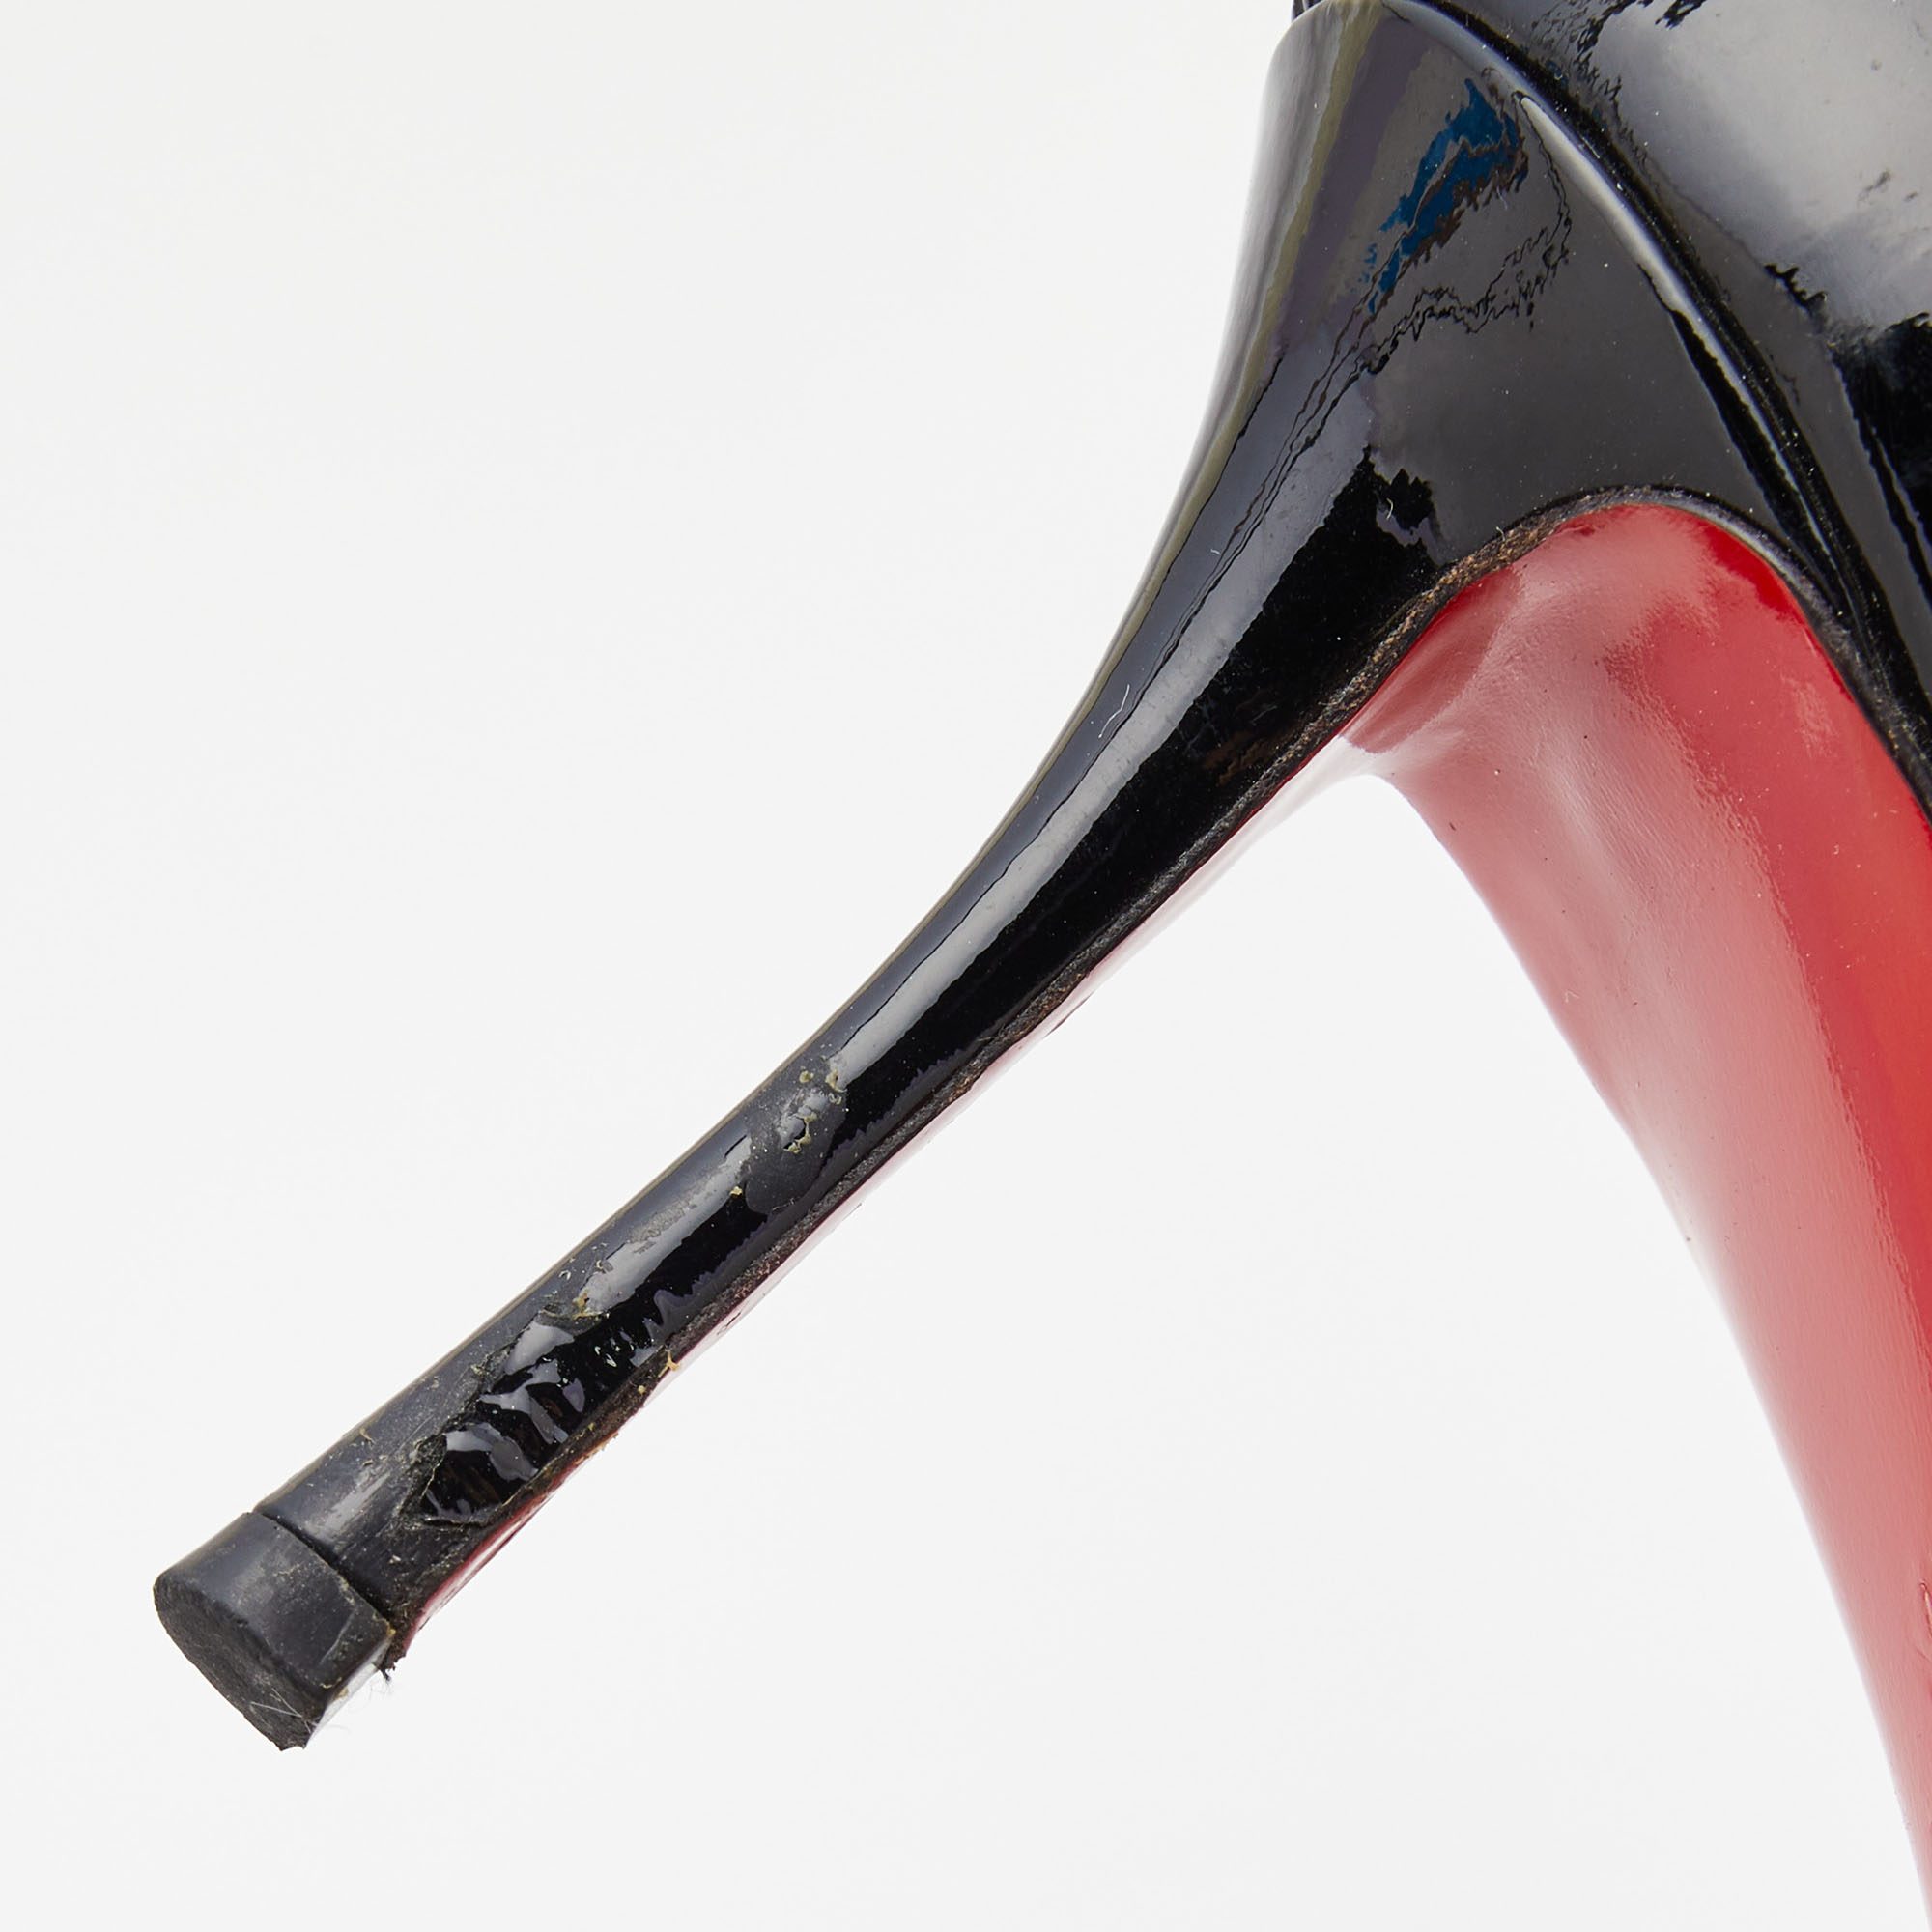 Christian Louboutin Black Patent Leather Vinodo Pumps Size 38.5